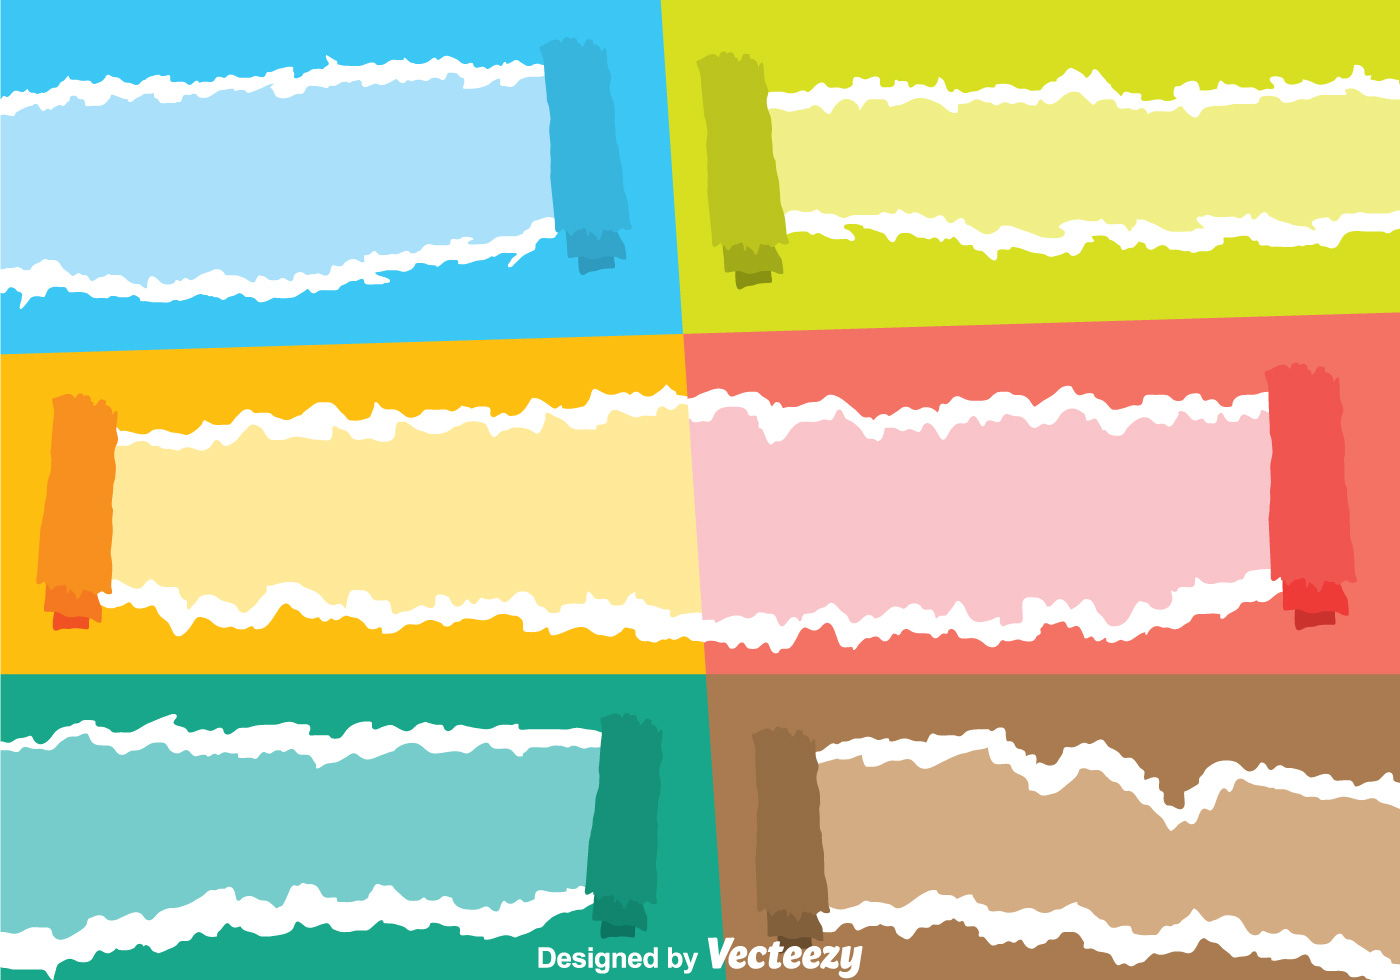 Color Ripped Paper Vectors - Download Free Vector Art, Stock Graphics